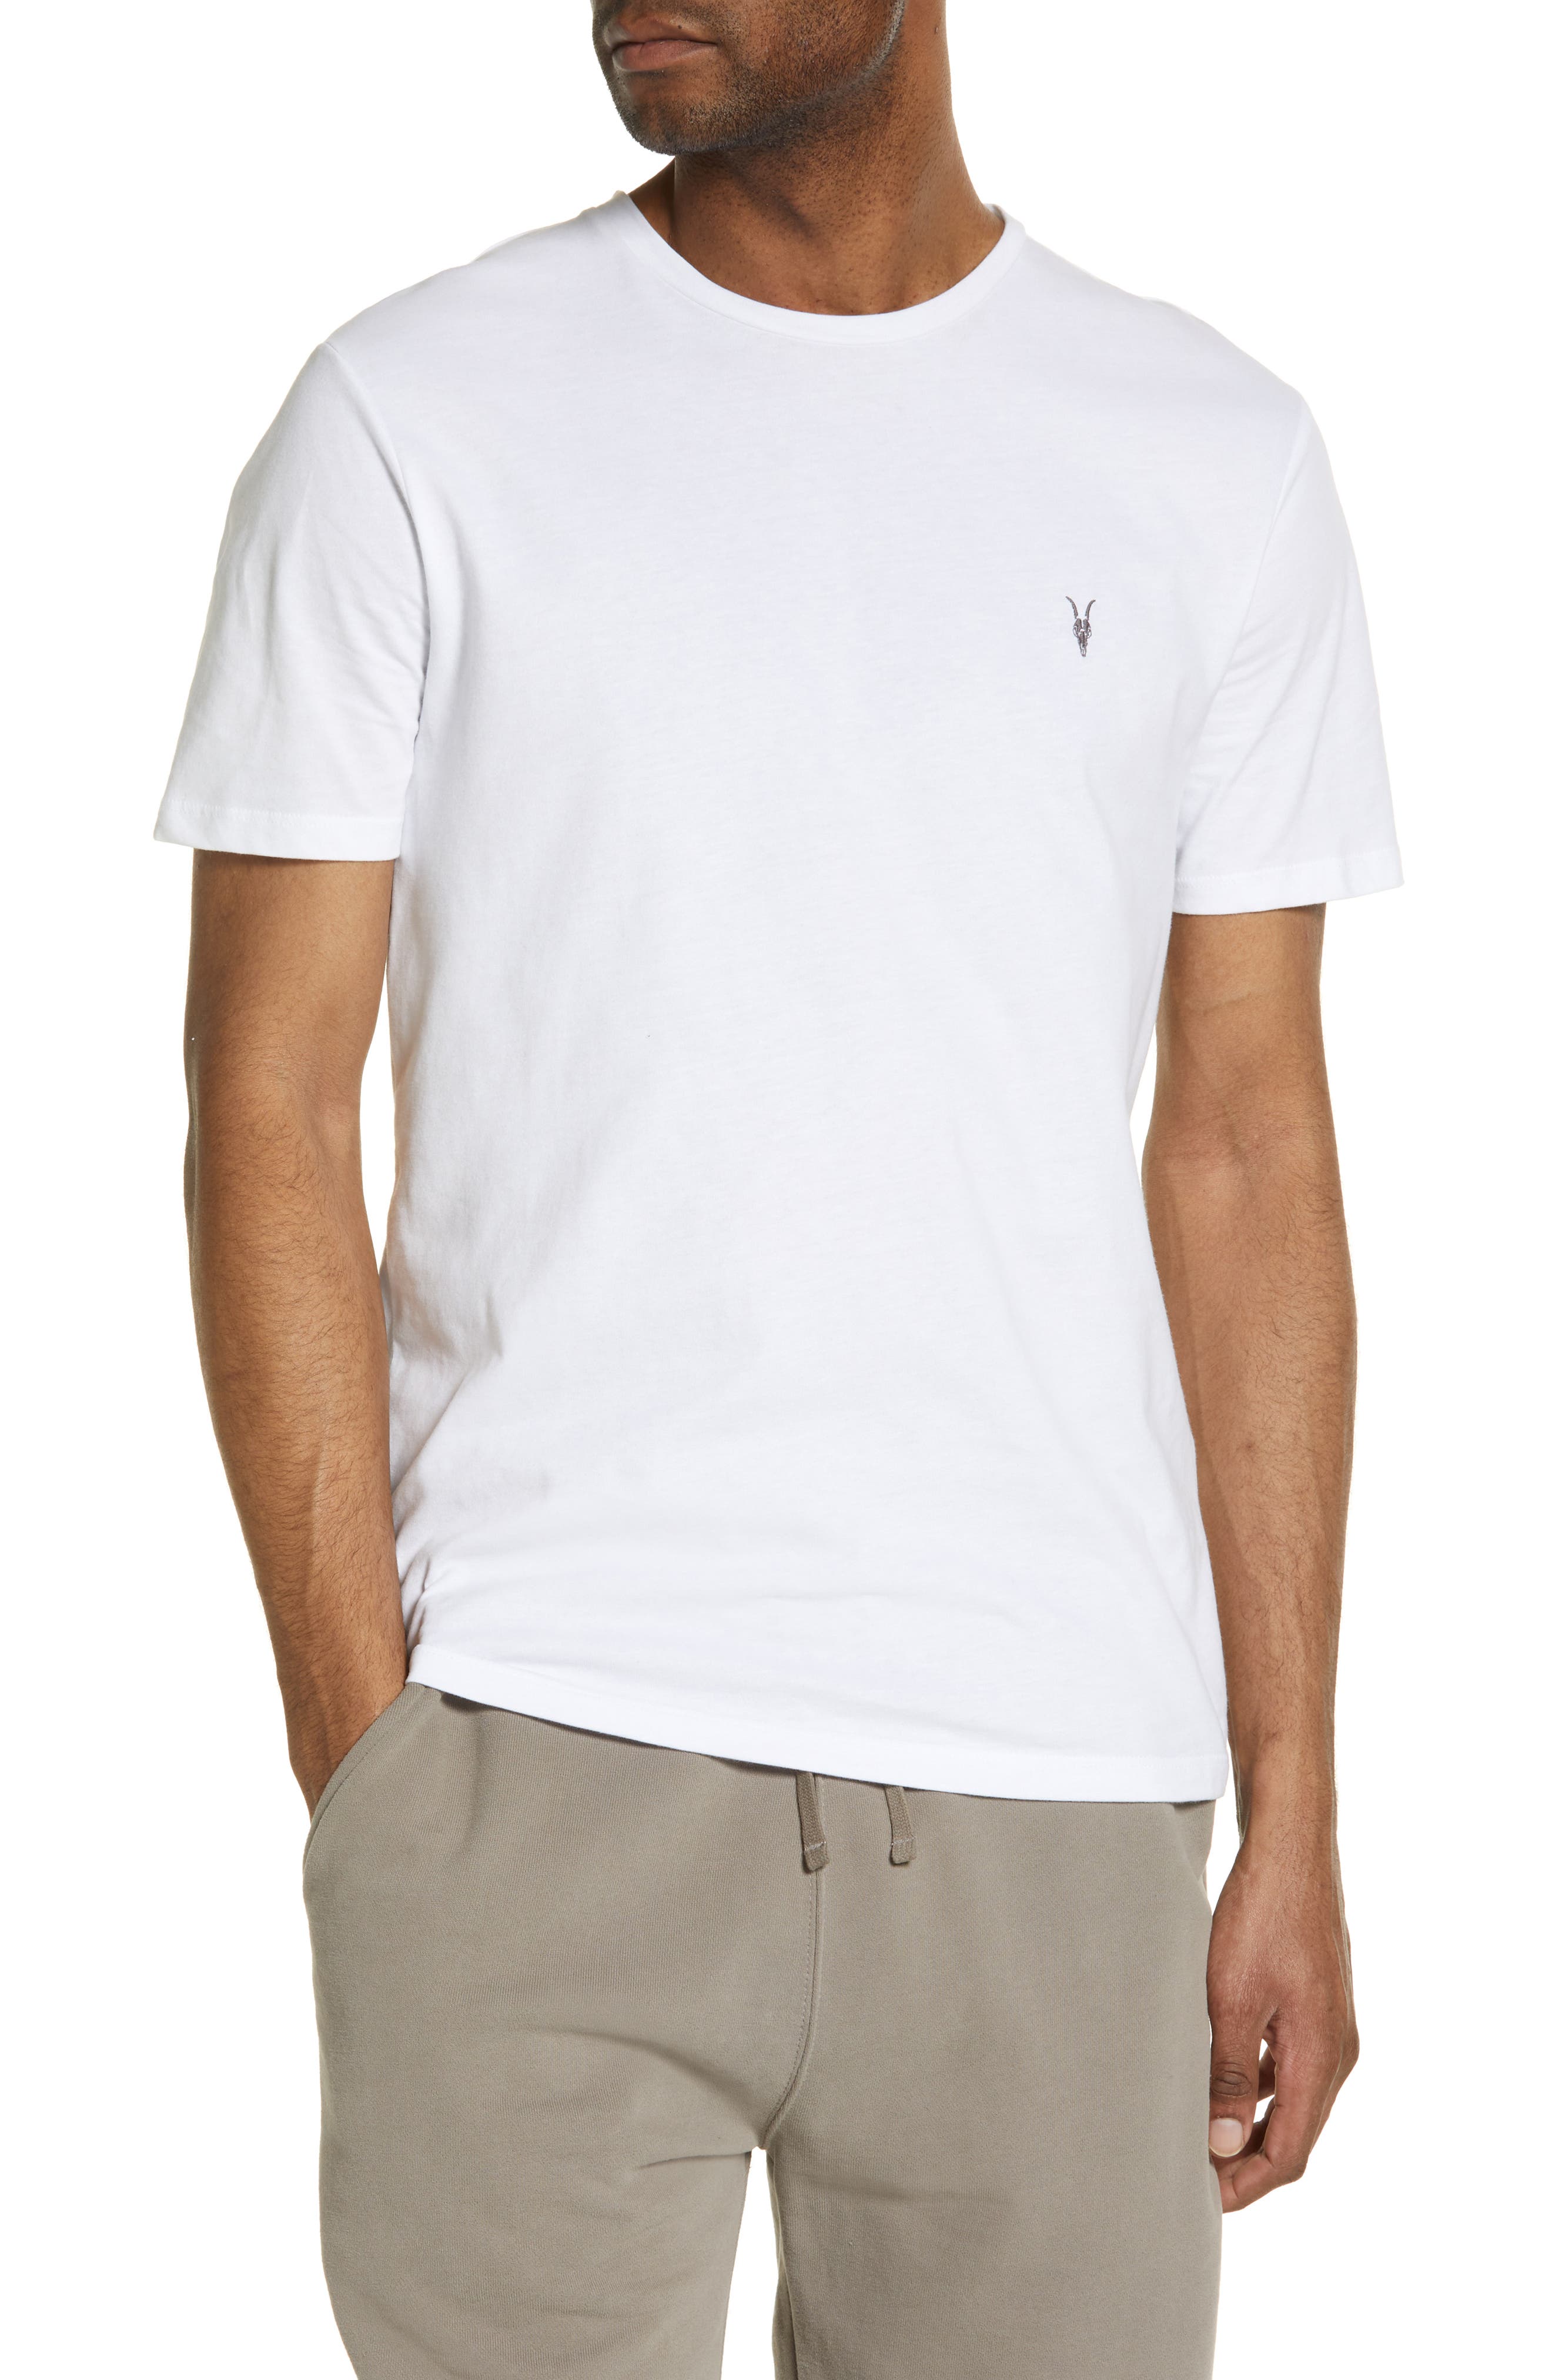 COOKI Mens Shirts Orange Bike Short Sleeve White Funny Tee Shirt Classic Slim Fit Graphic T-Shirt Casual Shirts